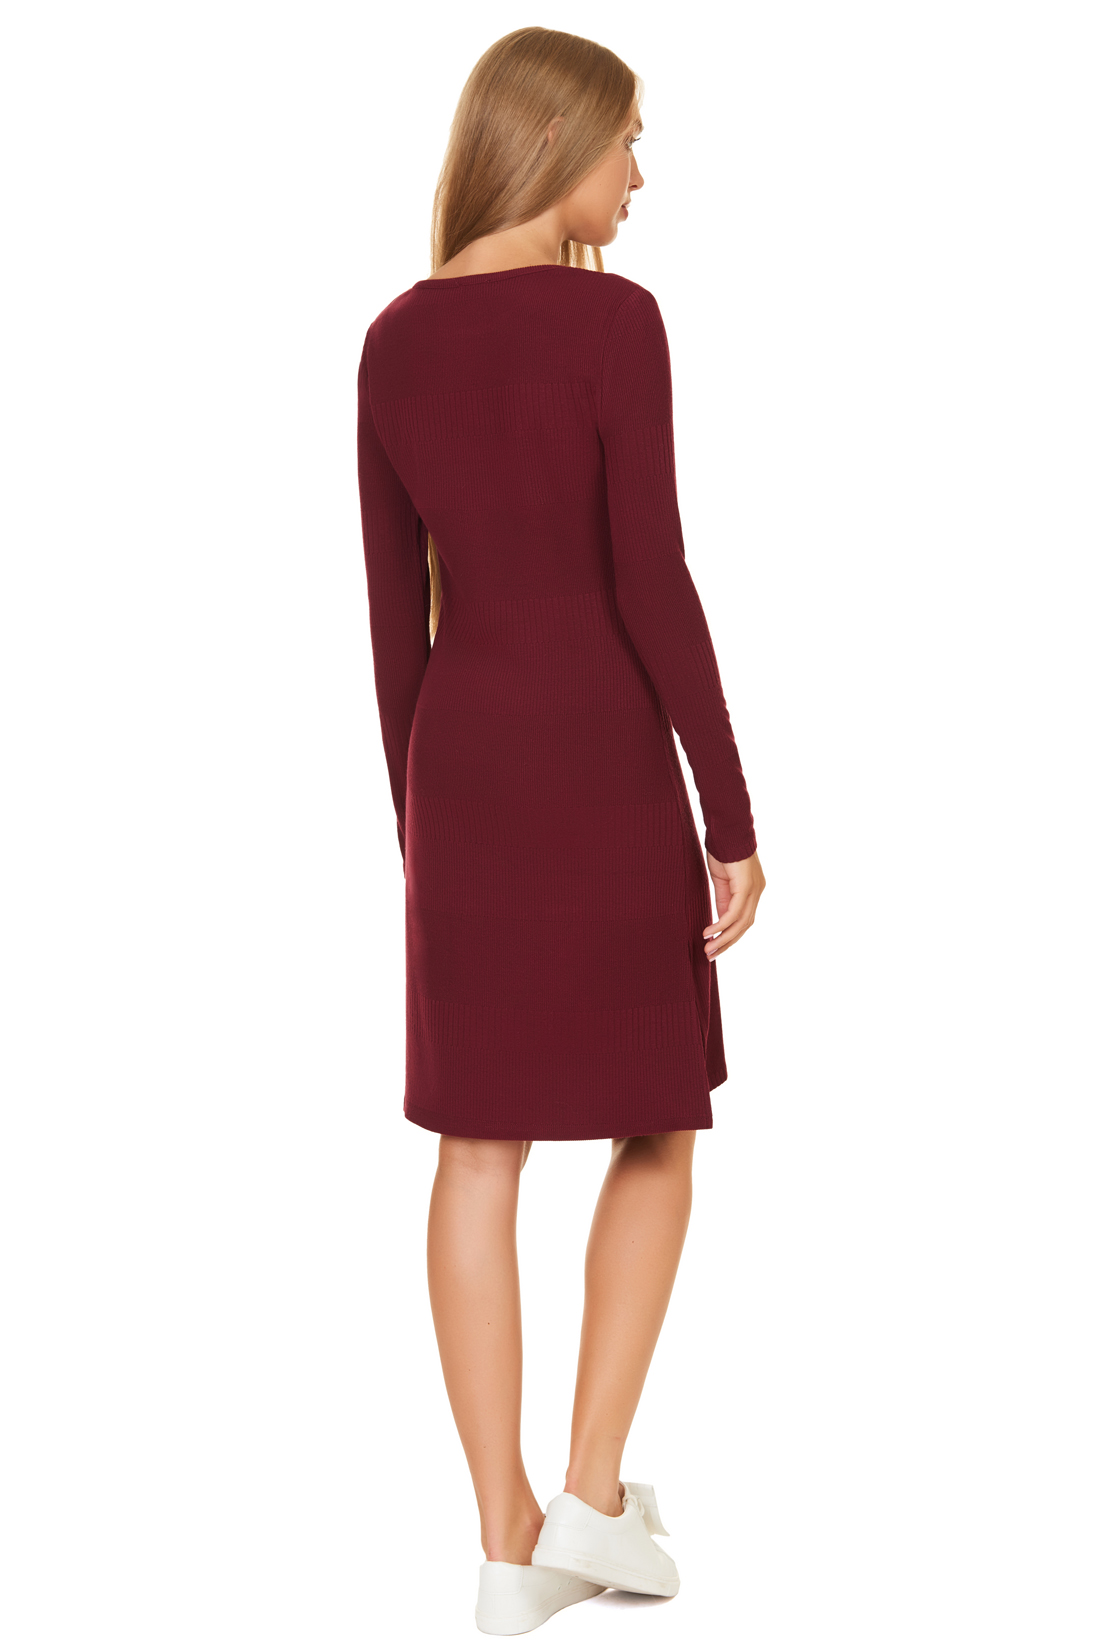 Платье из трикотажа с узором (арт. baon B457555), размер L, цвет красный Платье из трикотажа с узором (арт. baon B457555) - фото 2